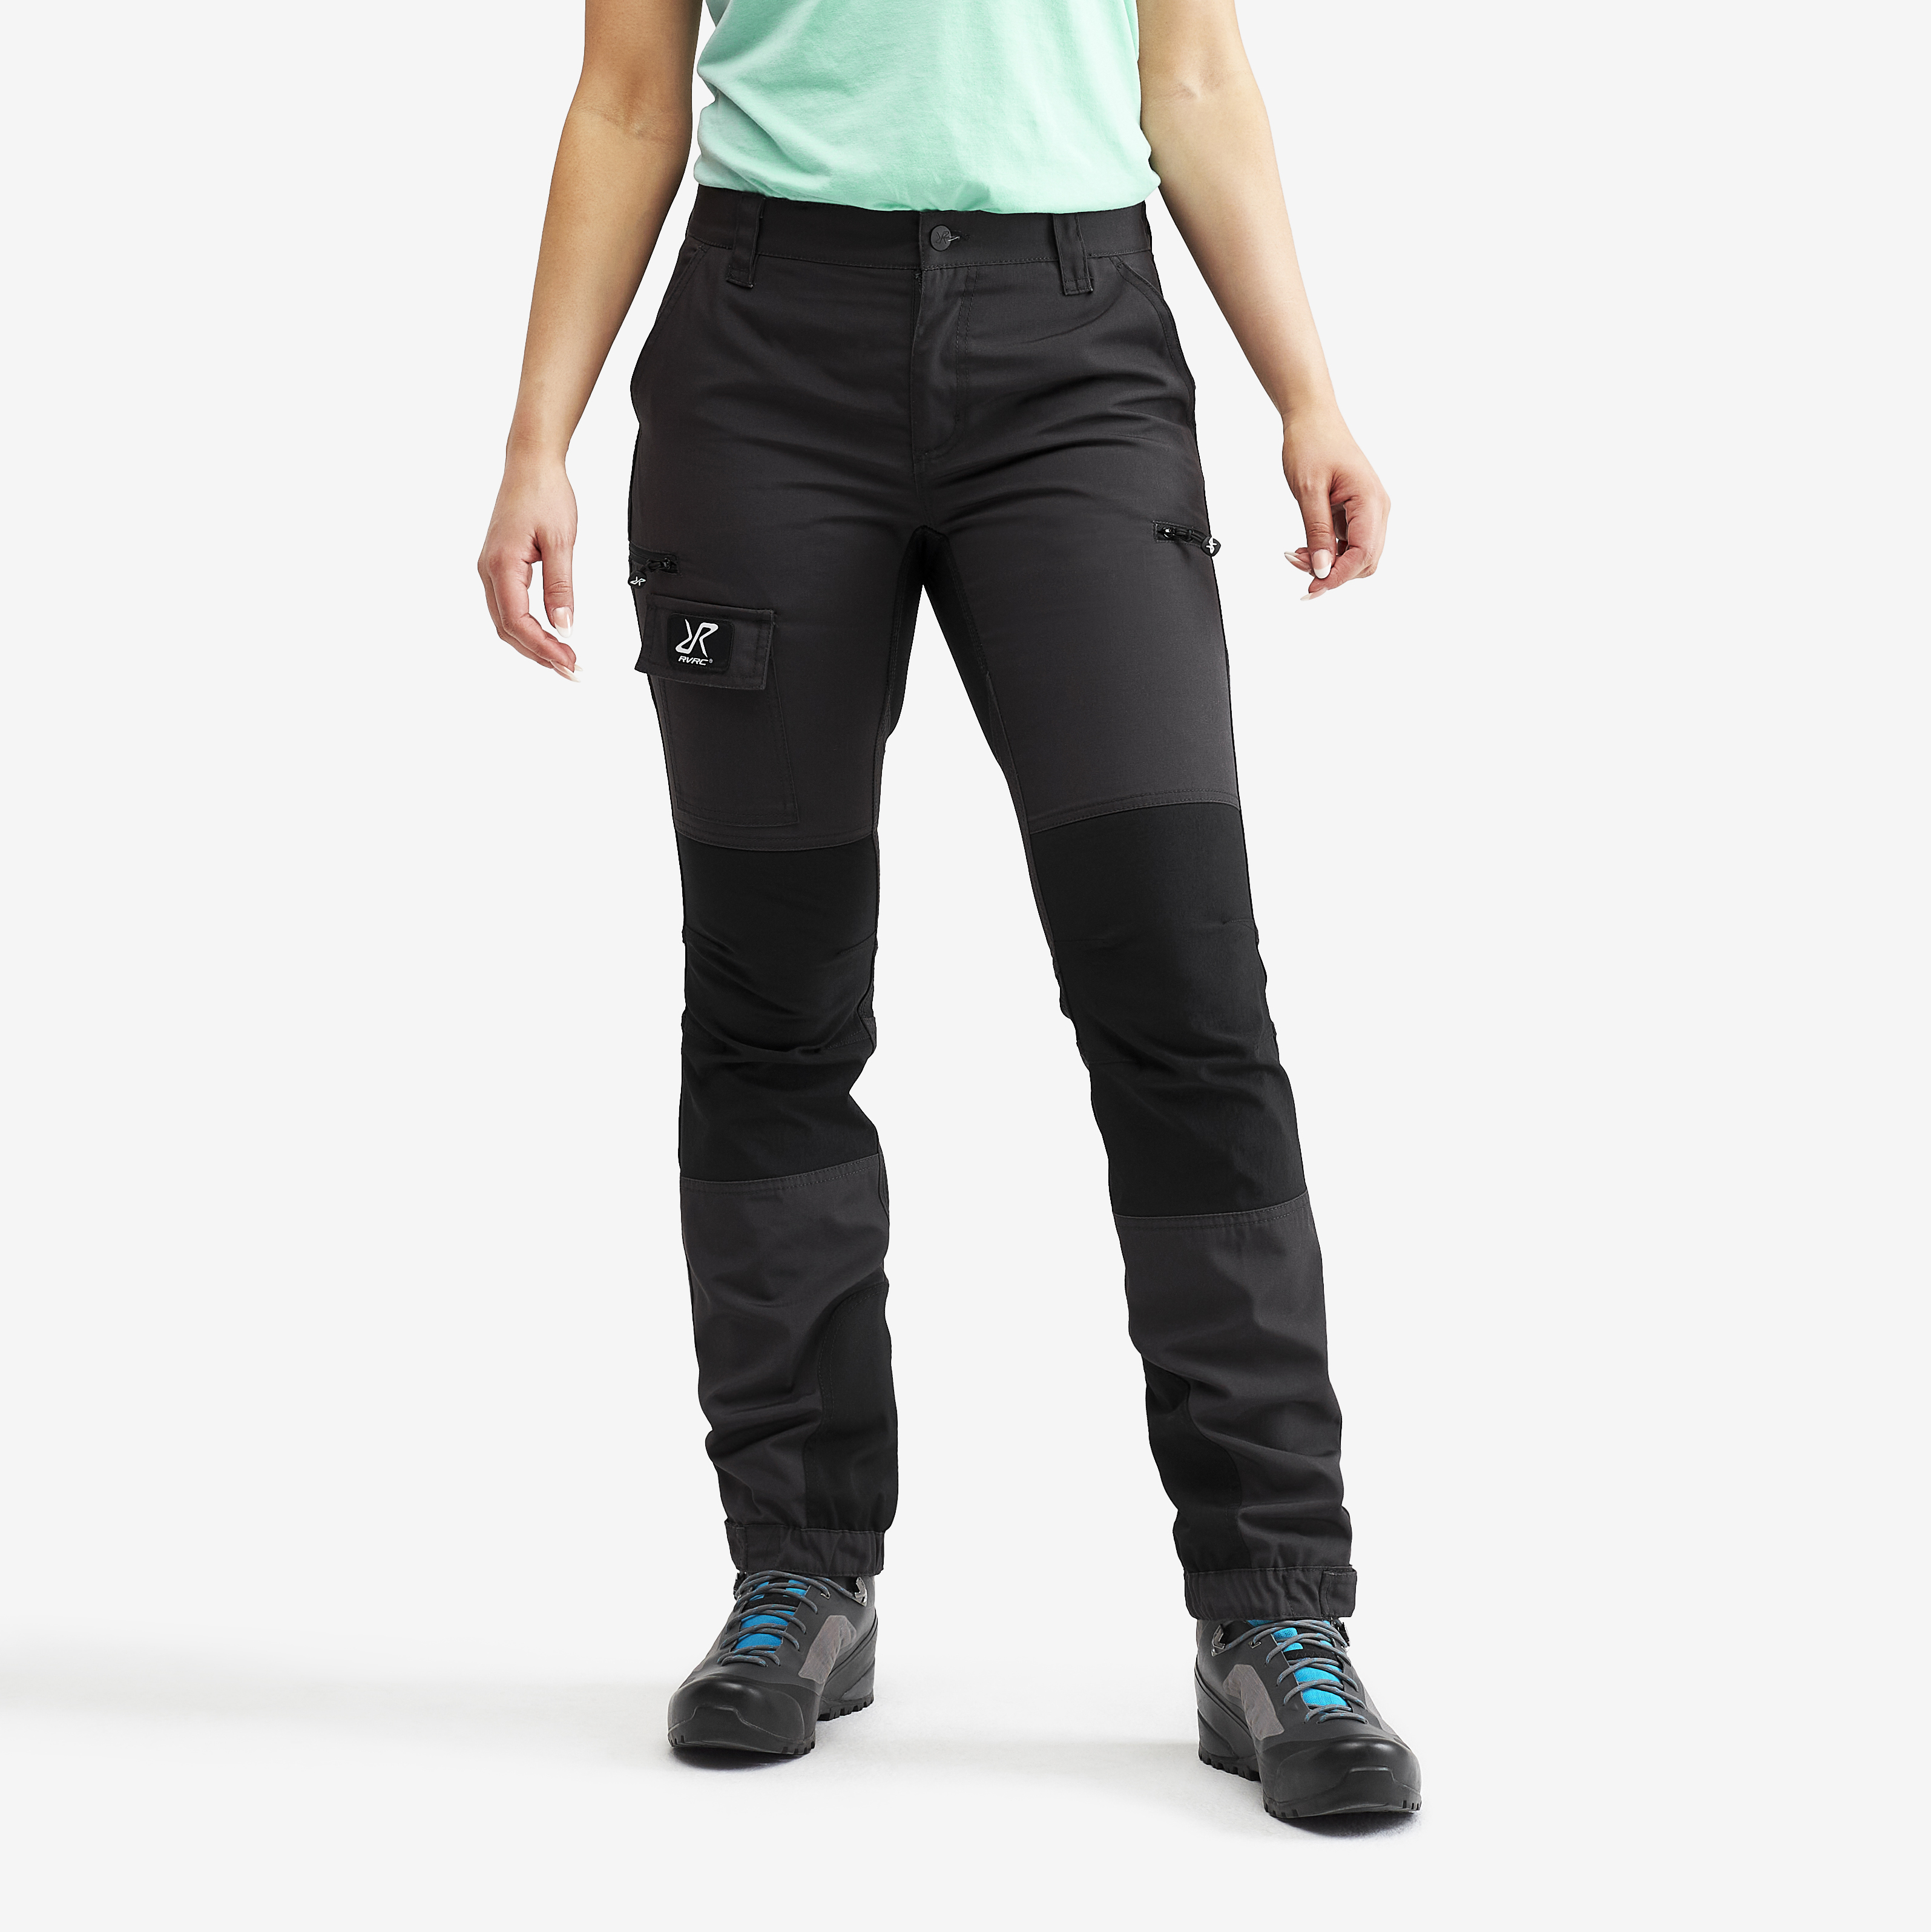 Nordwand outdoor pants for women in dark grey